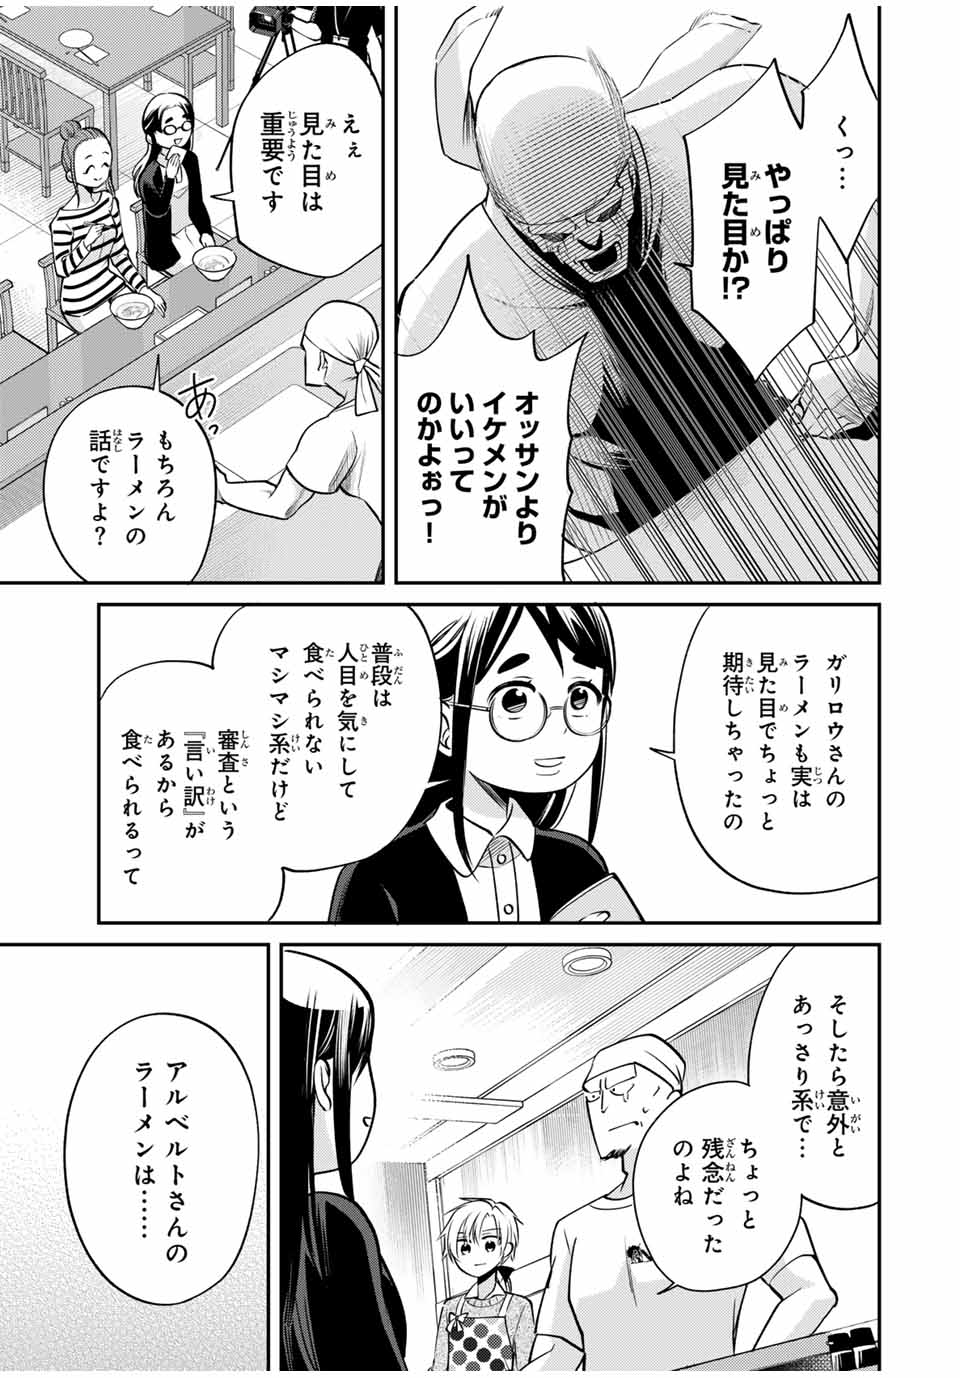 Gendai Teni no Dai Ni Ouji - Chapter 6.2 - Page 3